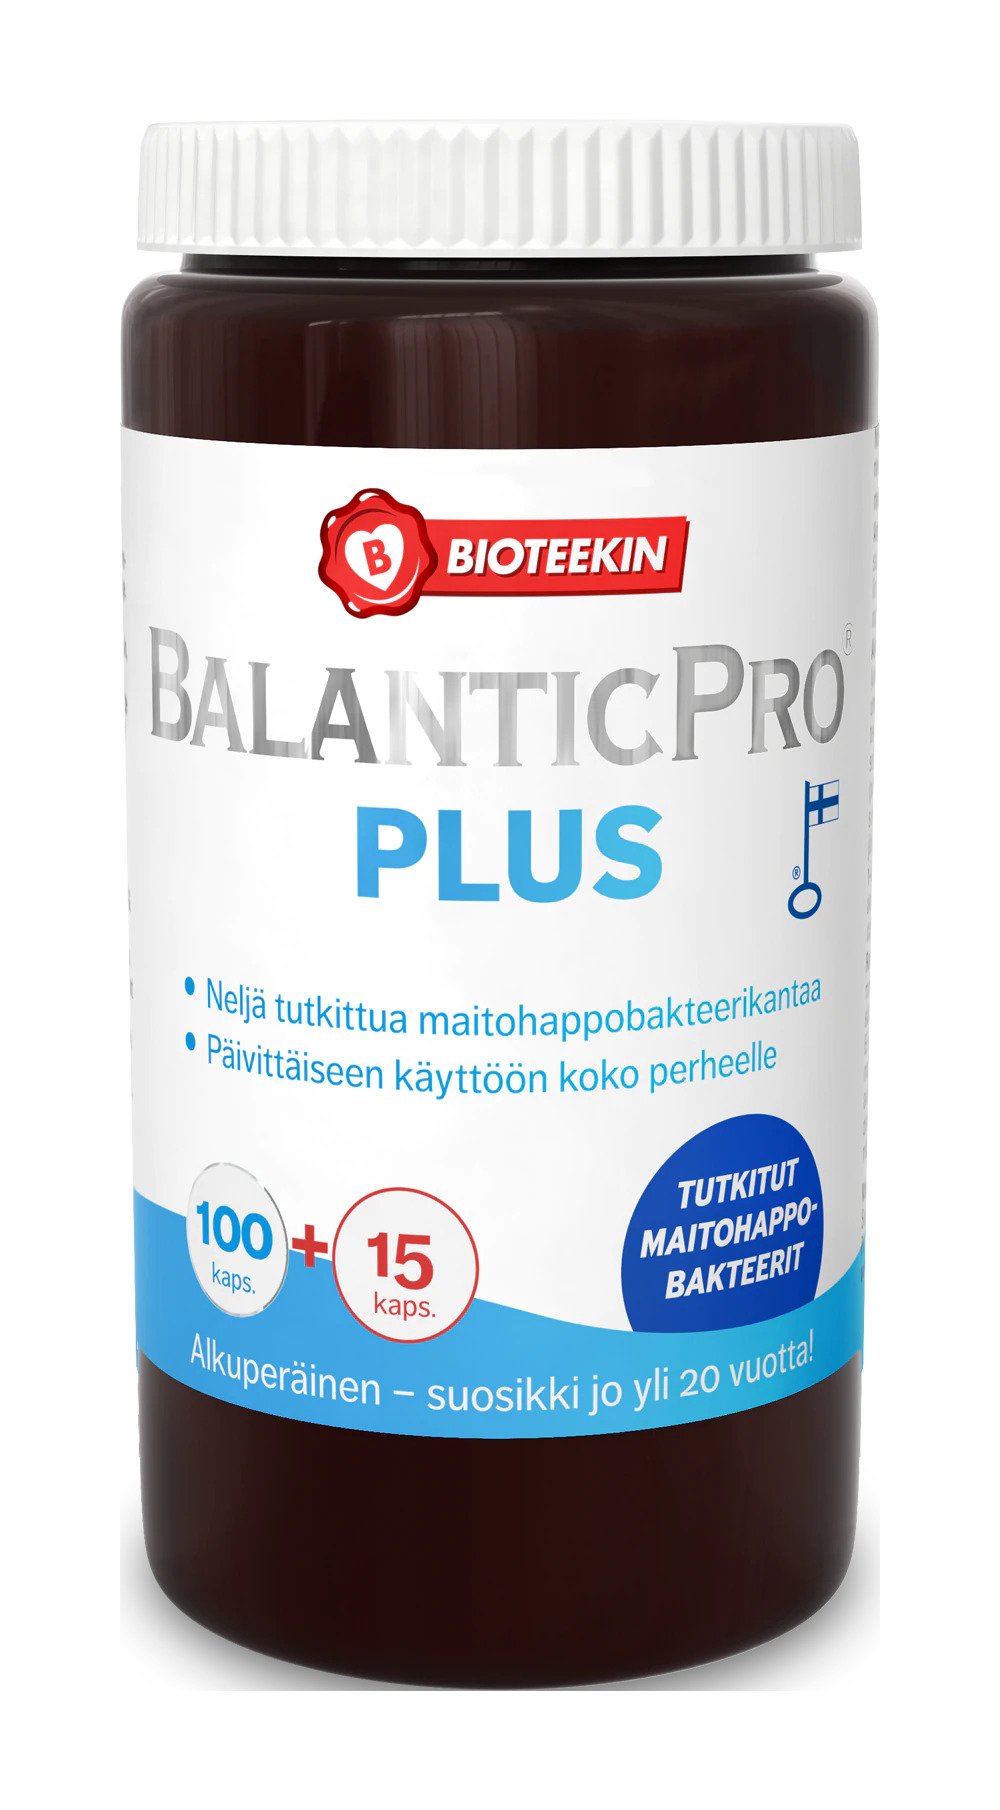 BalanticPro Plus Bonus 100+15 kaps